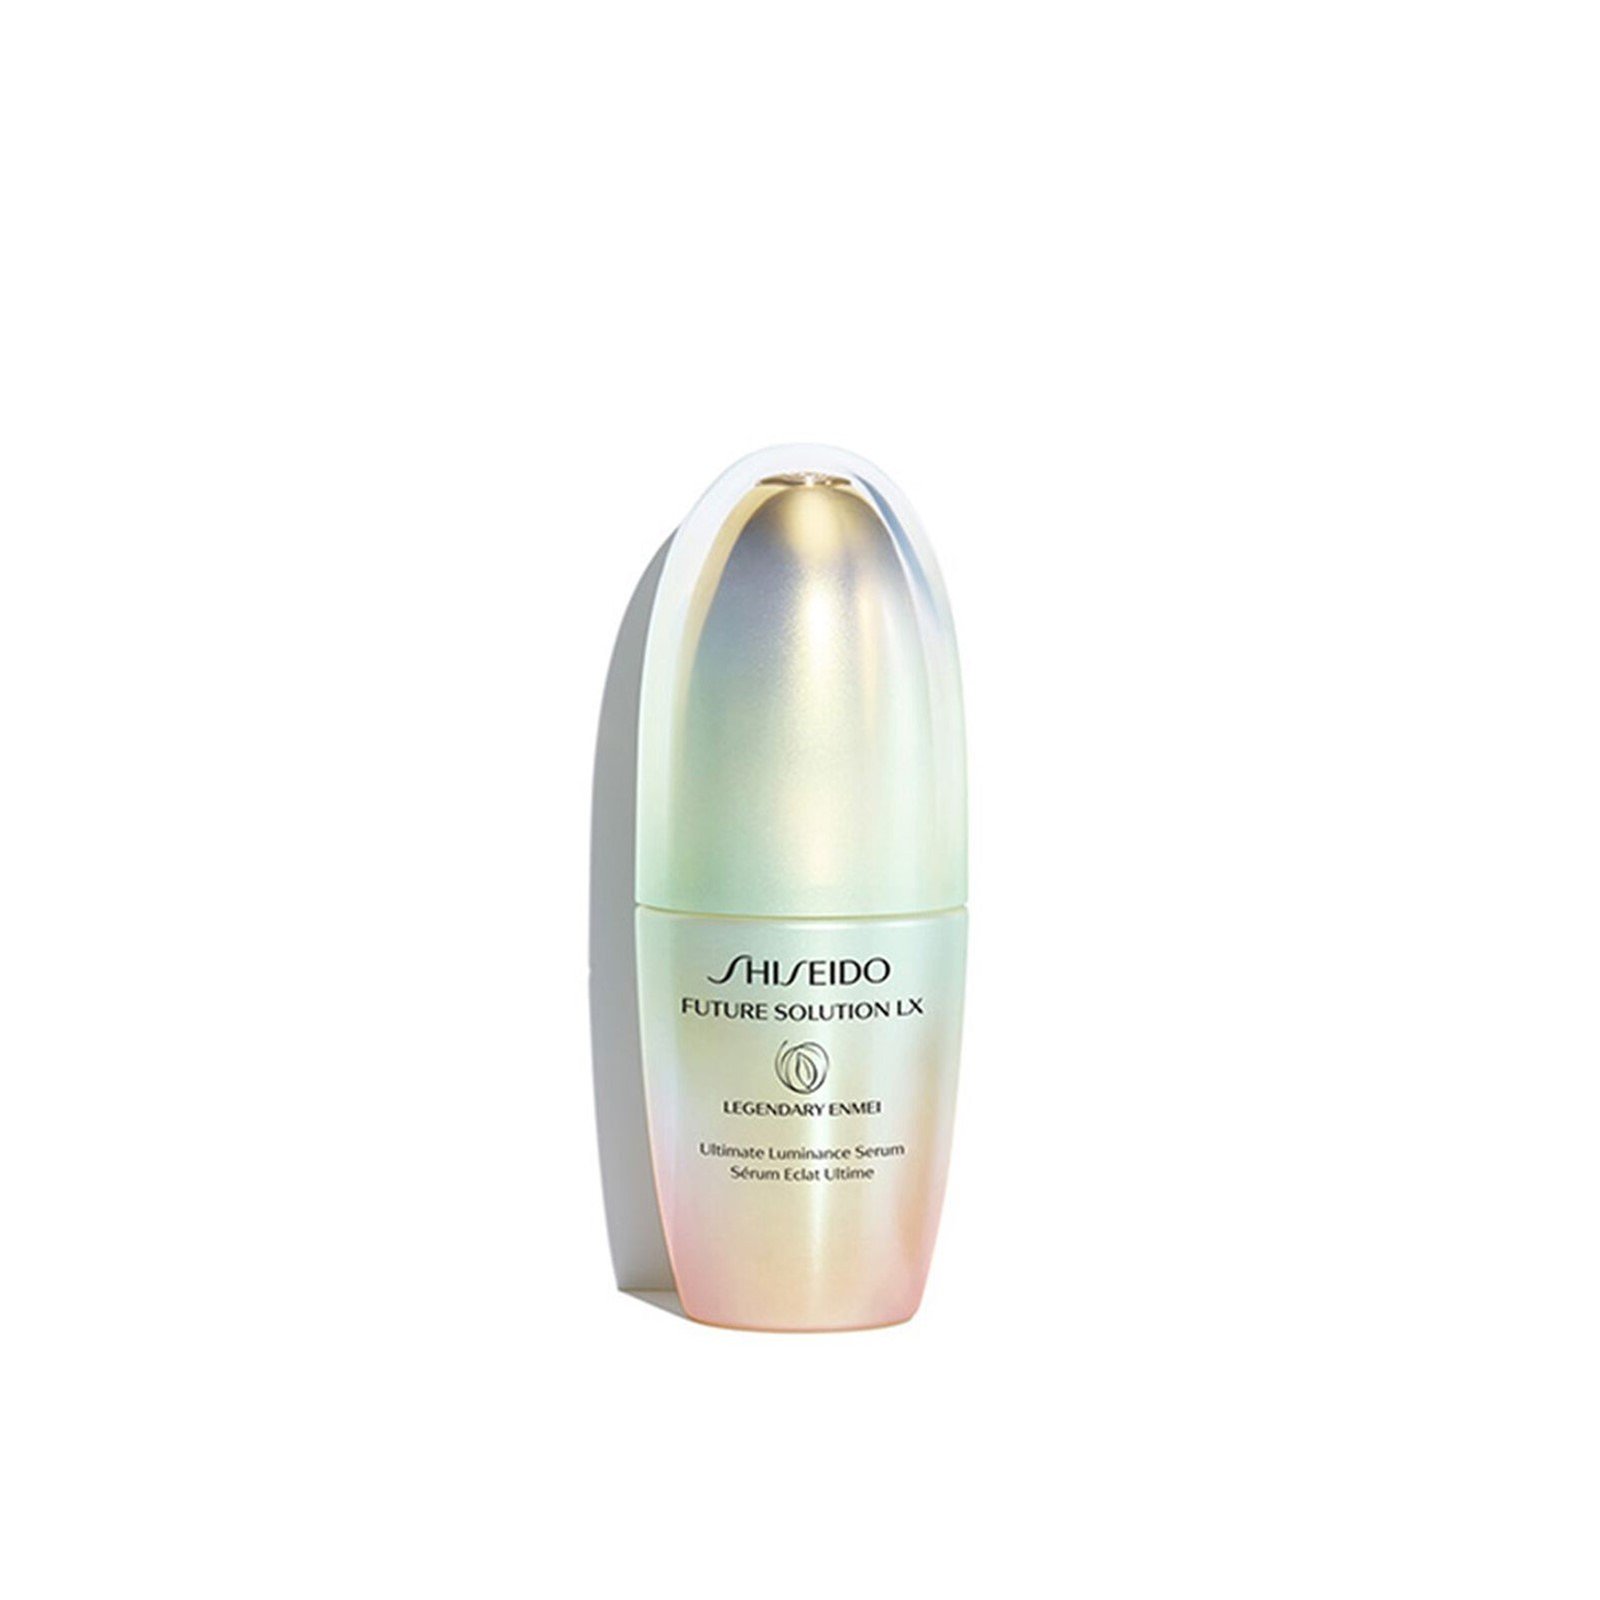 Shiseido Future Solution LX Legendary Enmei Ultimate Luminance Serum 30ml (1floz)